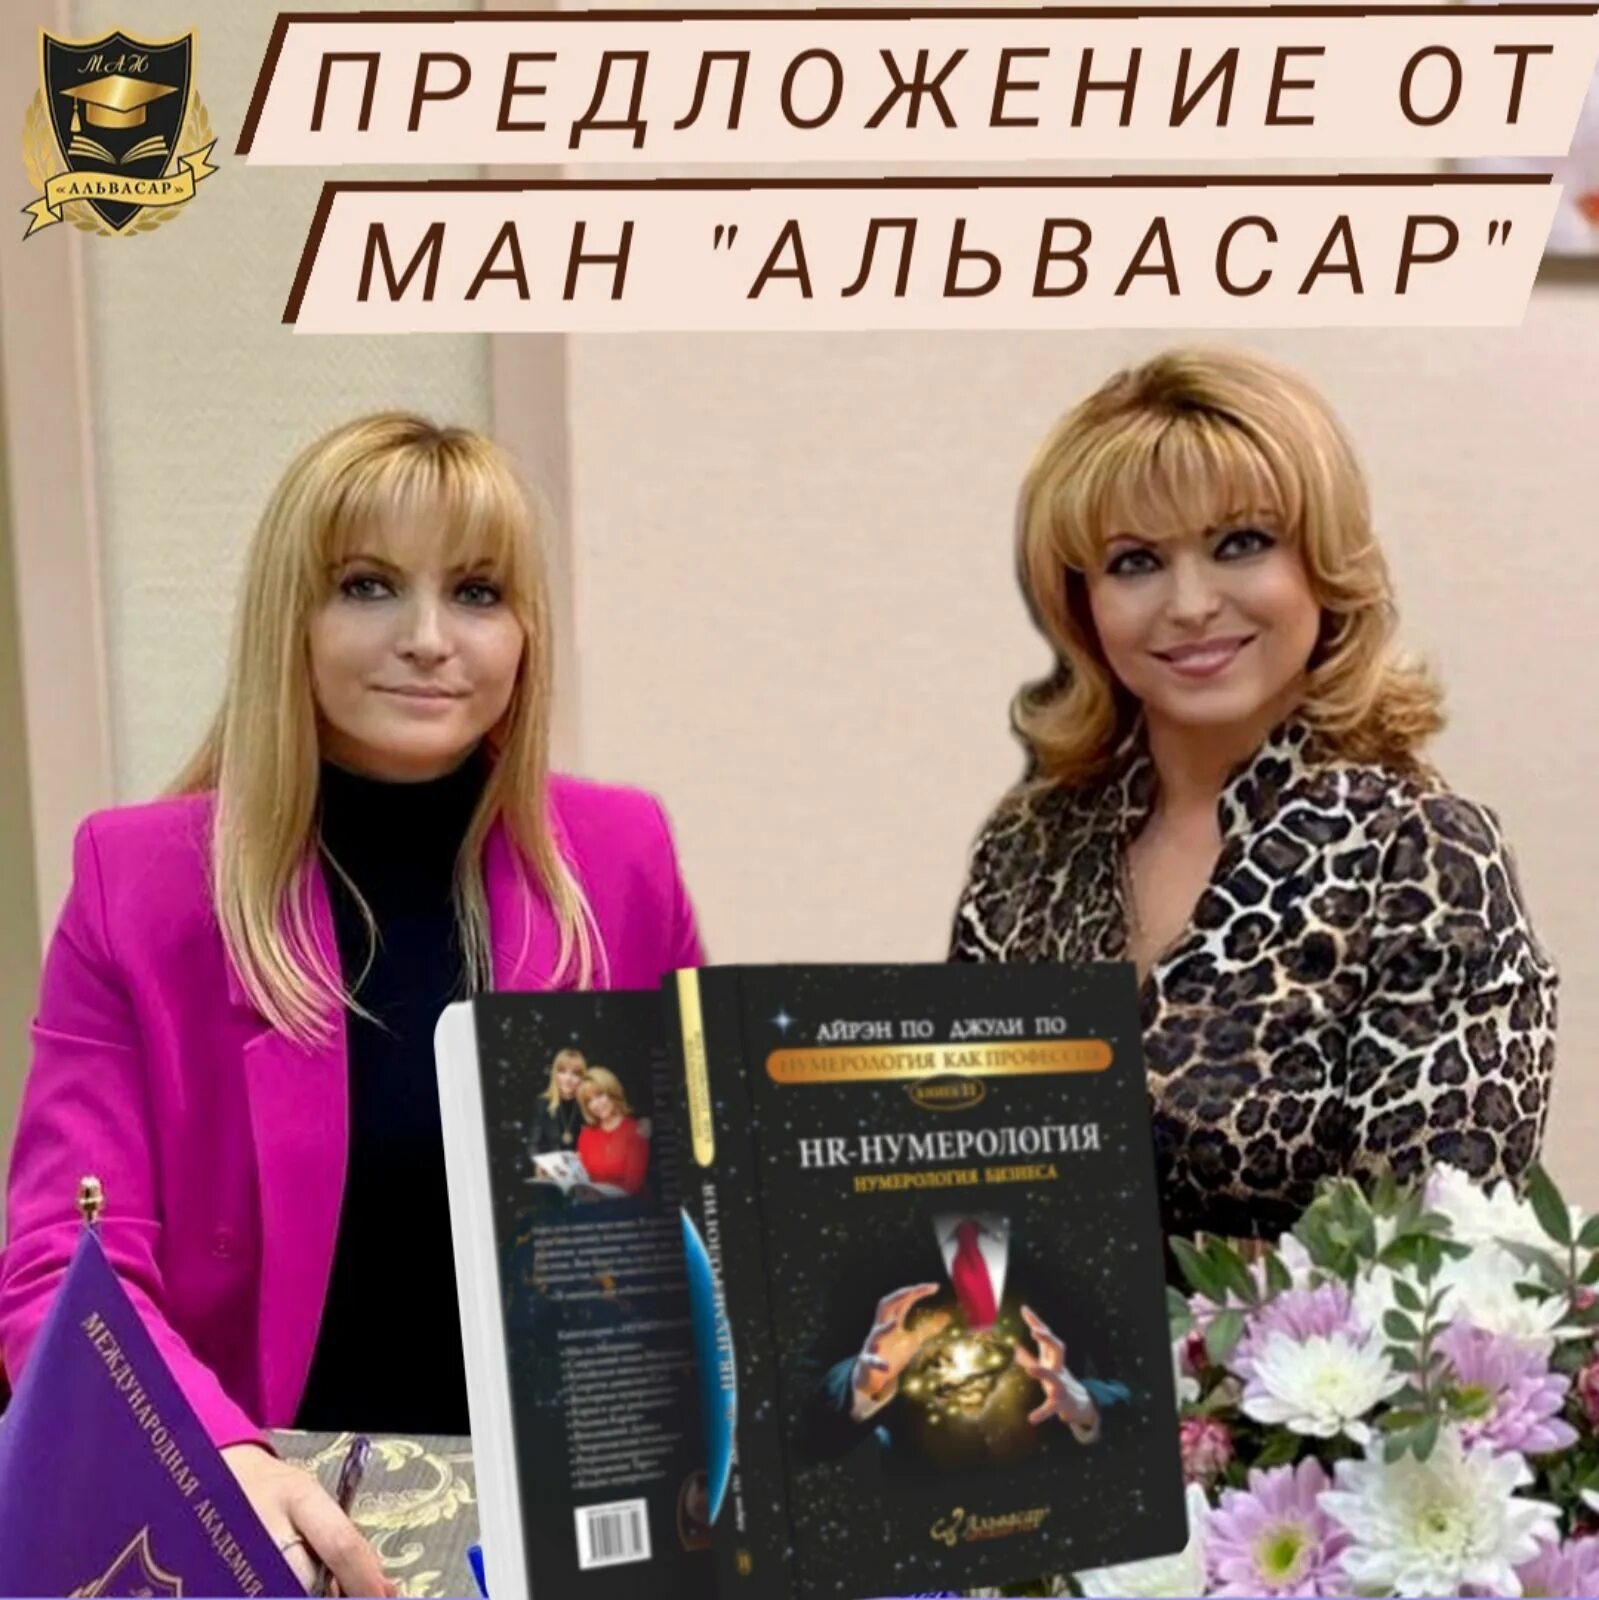 Сайт альвасар купить книги. Академия Альвасар. Альвасар в Санкт-Петербурге. Альвасар книги.